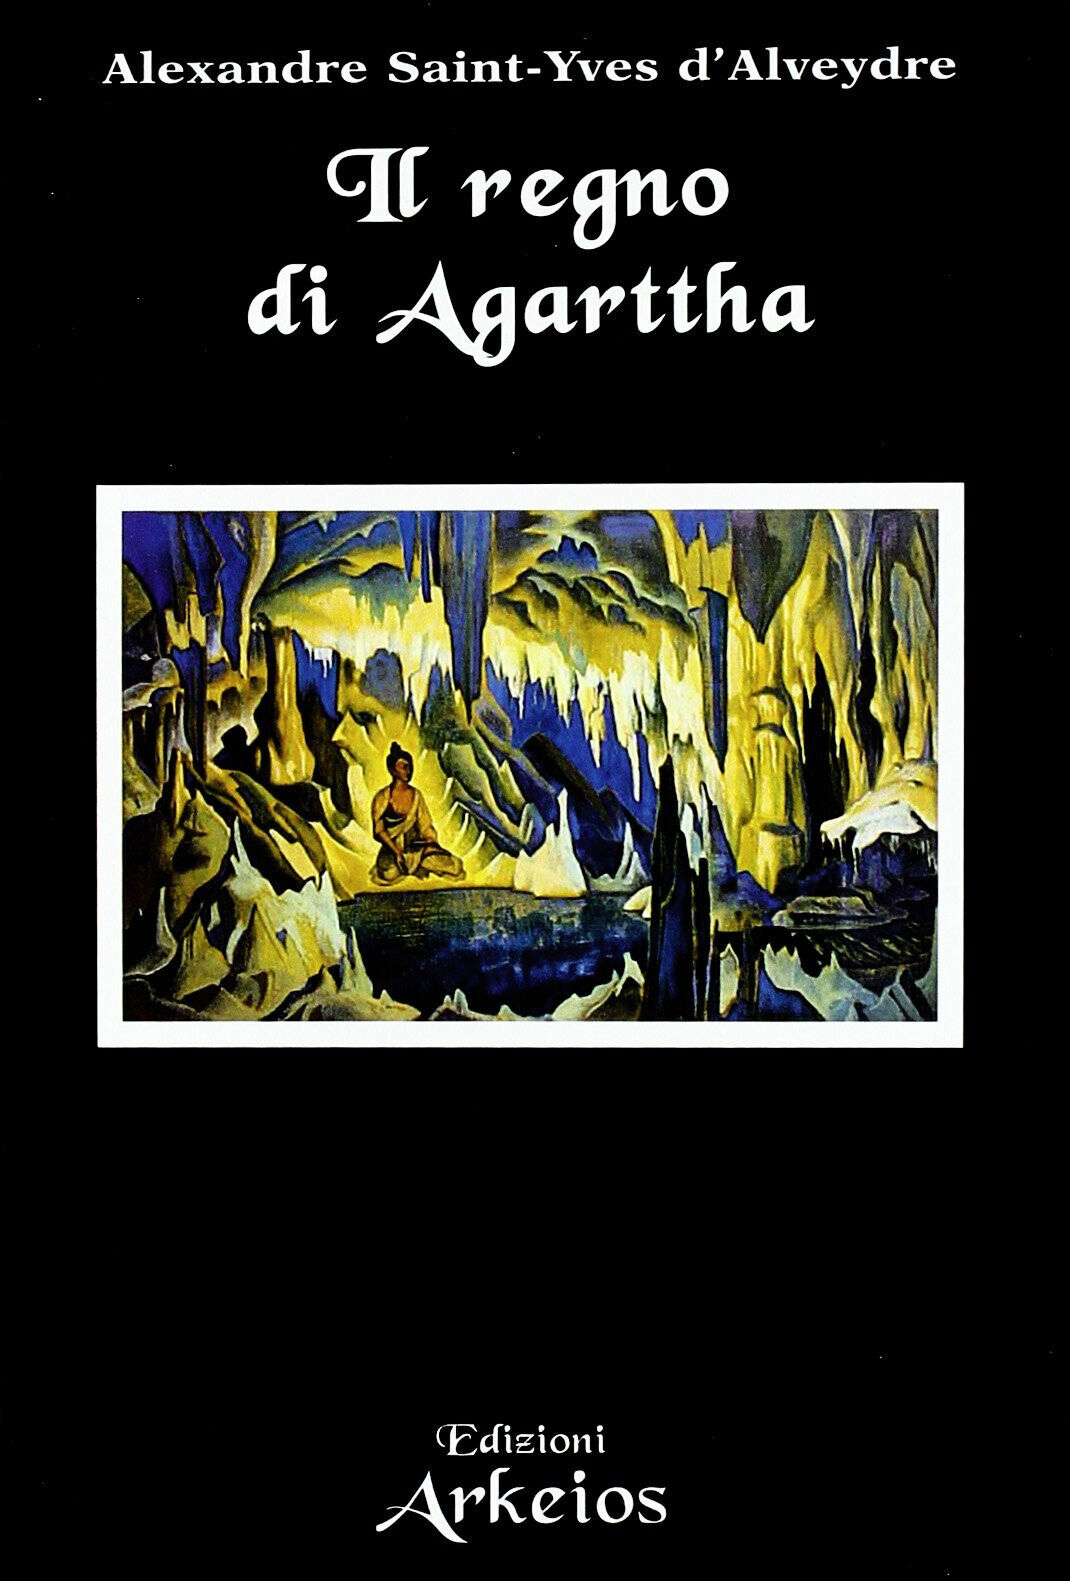 Il regno di Agarttha - Alexandre Saint-Yves d'Alveydre - Arkeios, 2009 libro usato